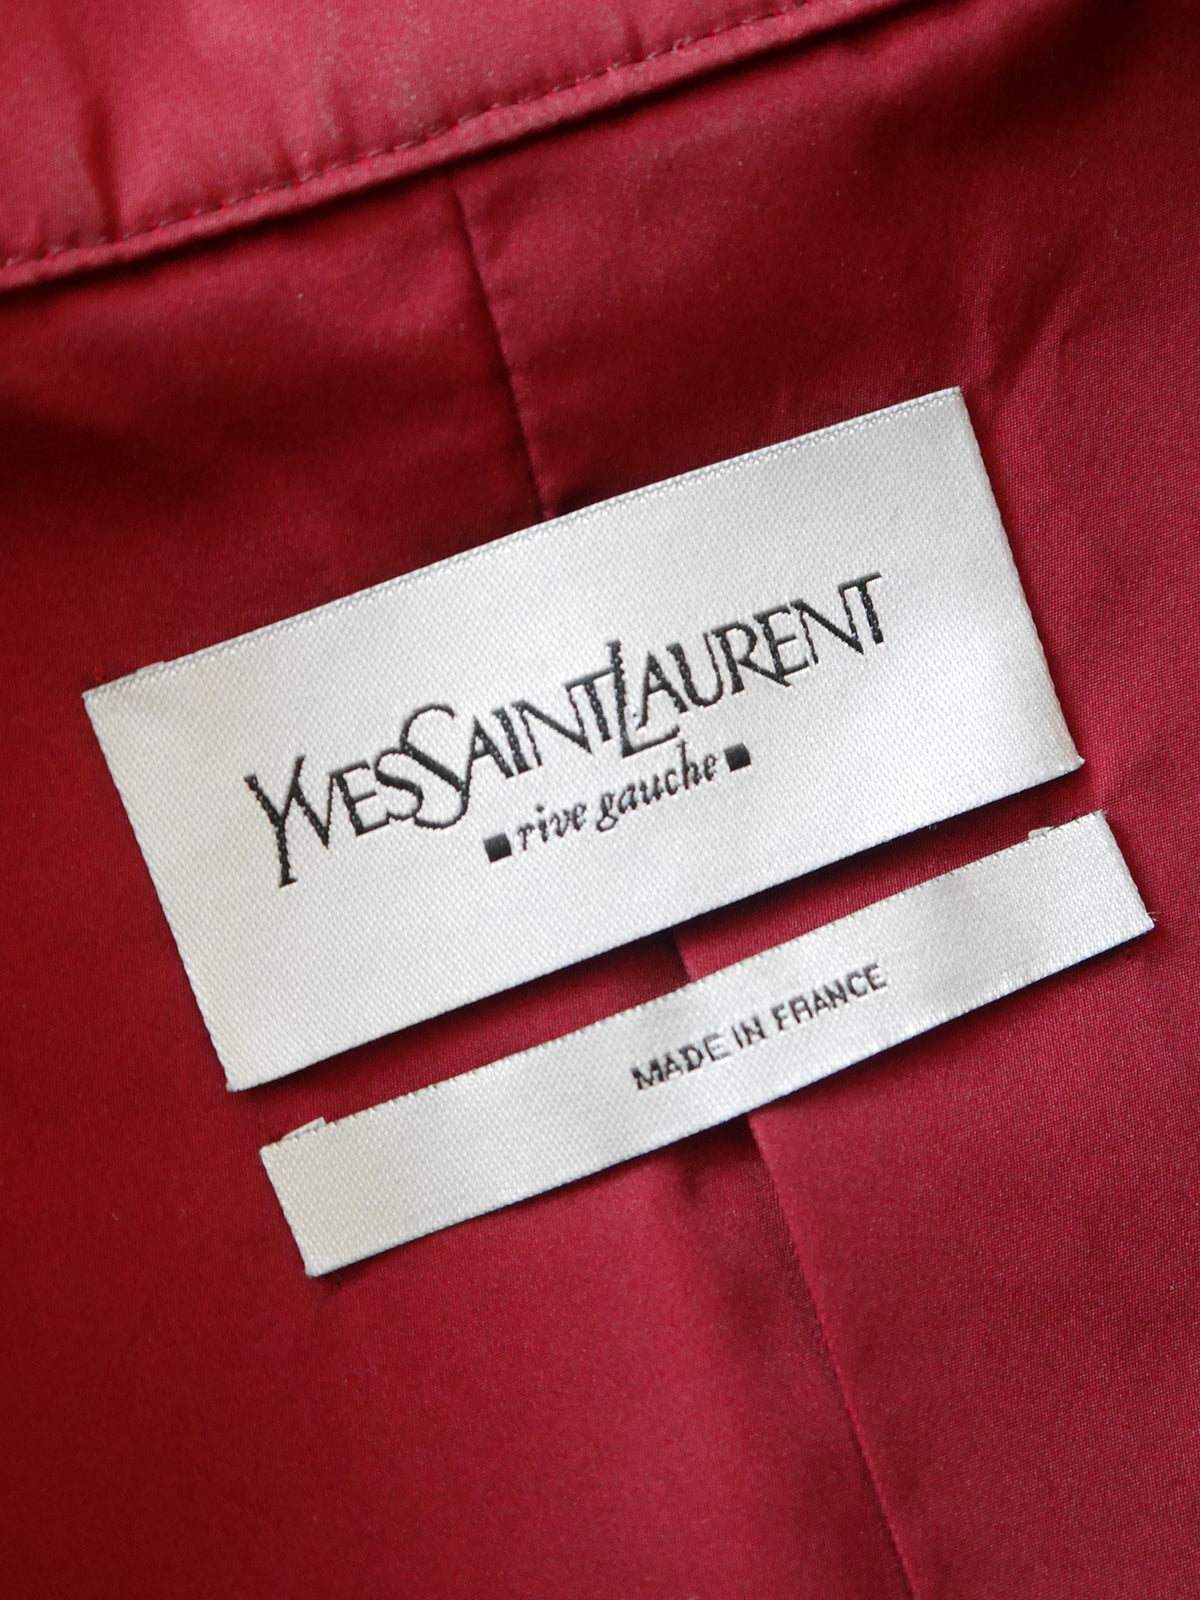 YVES SAINT LAURENT by Tom Ford Fall 2004 Crimson Chinoiserie Pagoda Silk Jacket